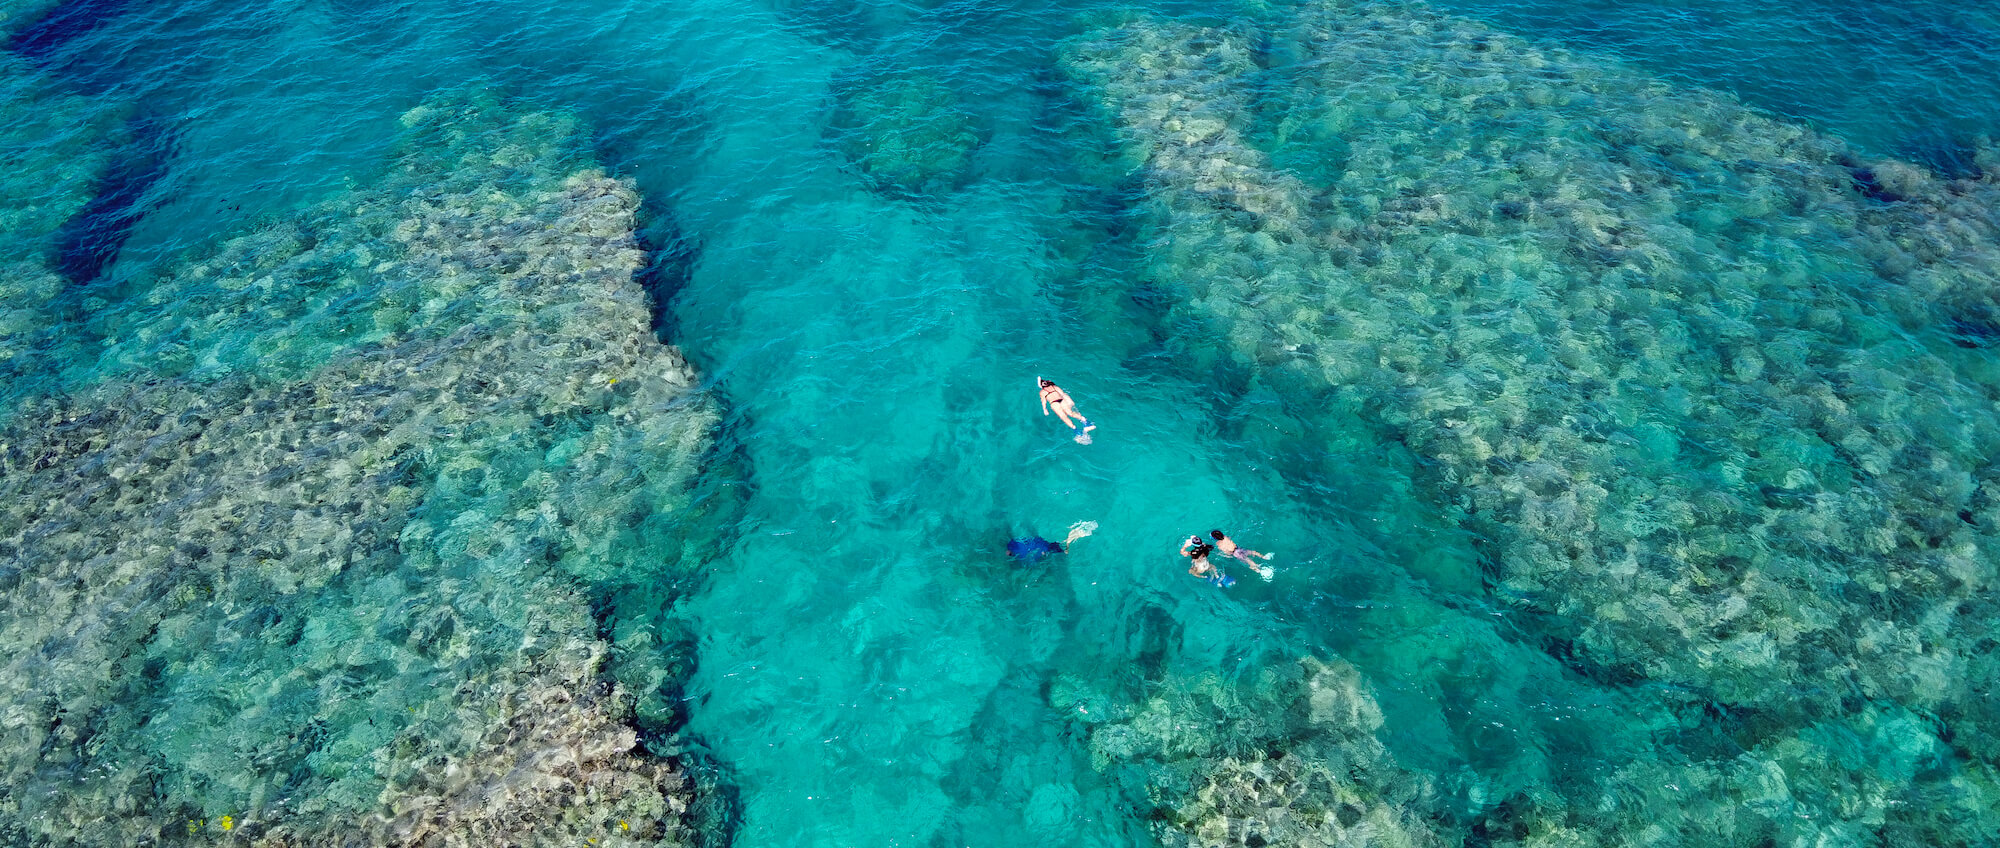 Snorkeling | Ocean Sports at Mauna Lani, Hawaii